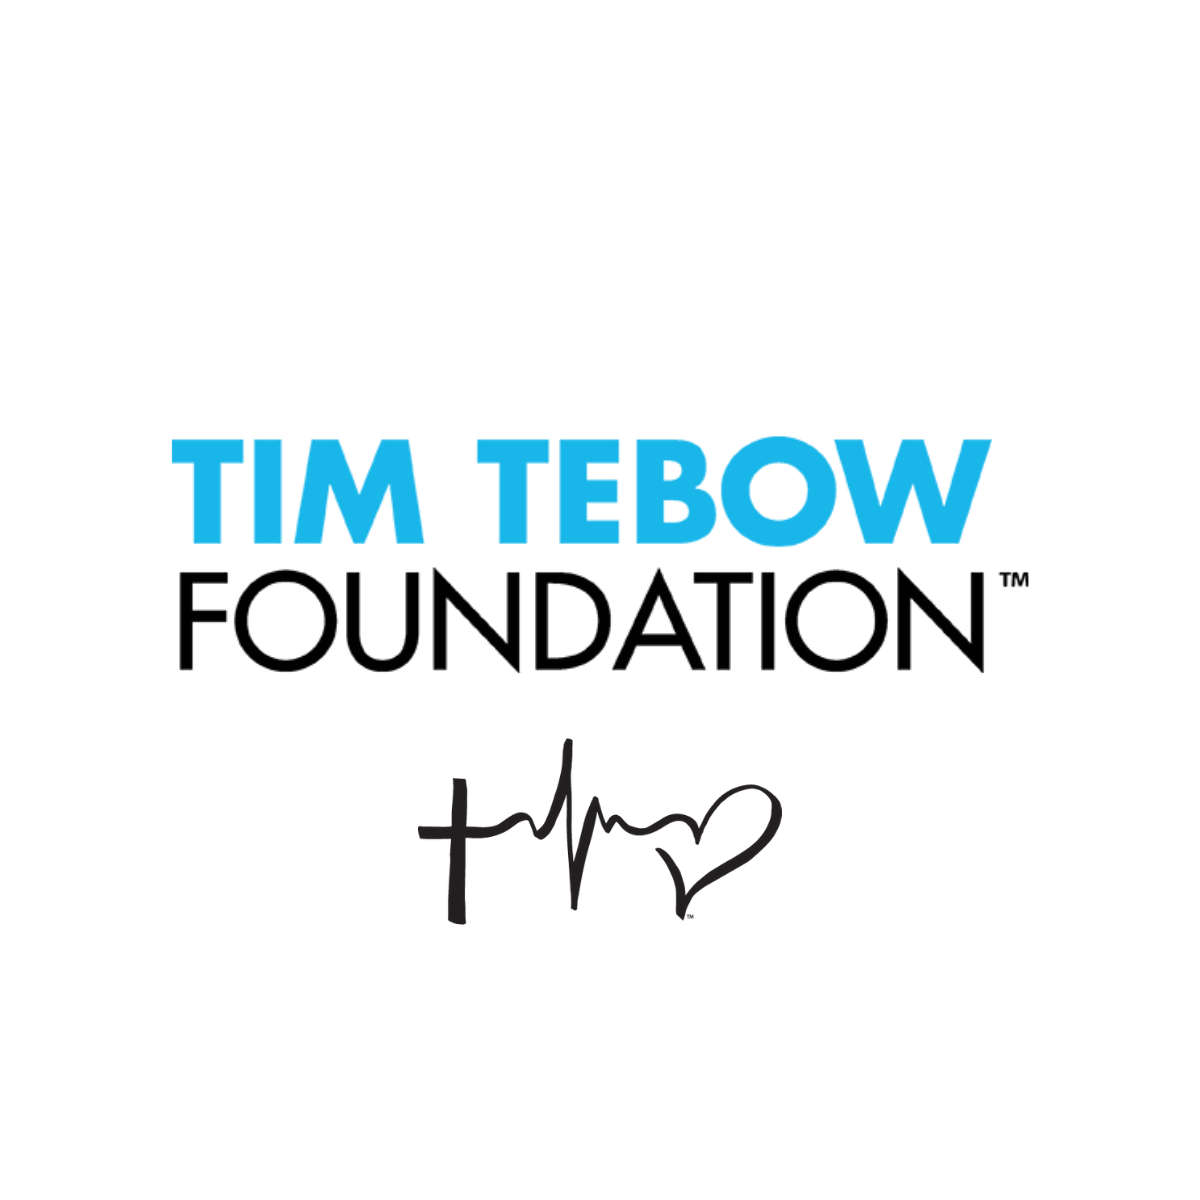 Tim Tebow Foundation - Crunchbase Company Profile & Funding